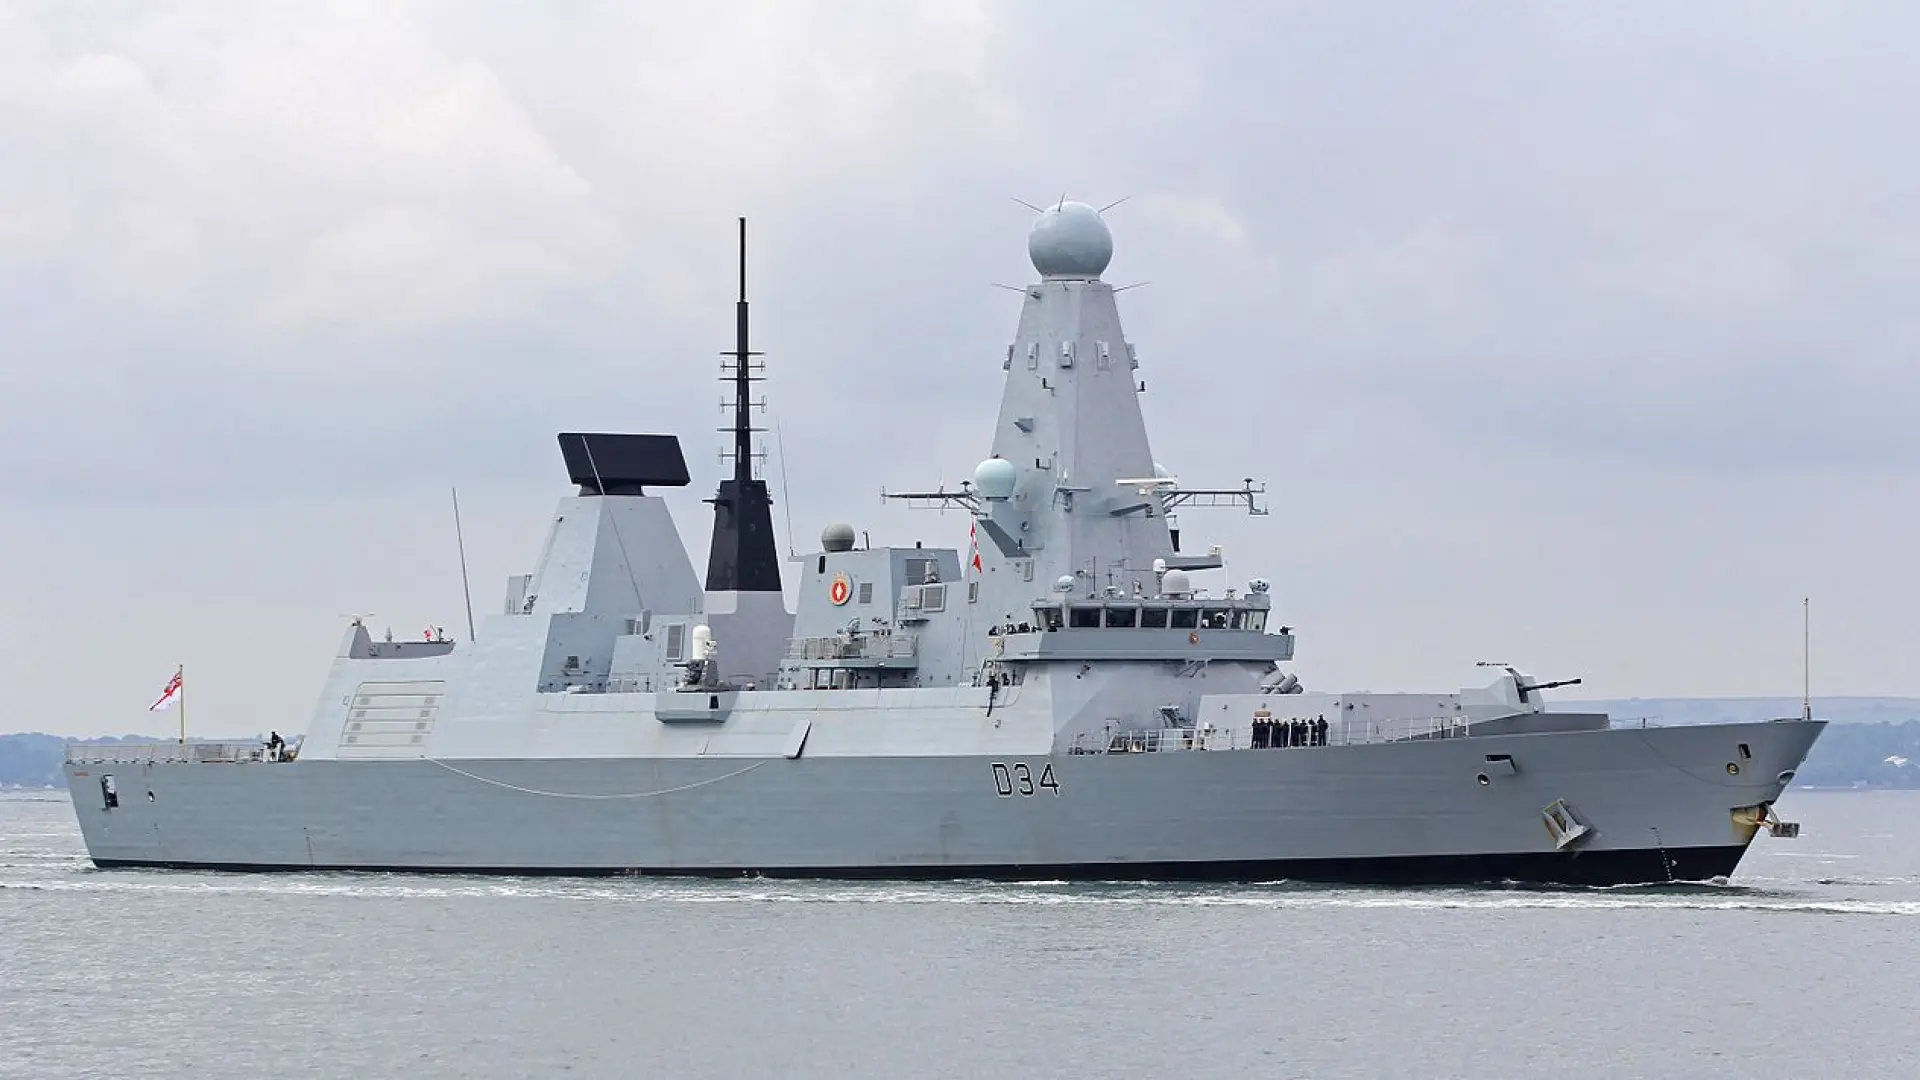 La Marina británica derriba un misil de los hutíes a buques mercantes en el mar Rojo